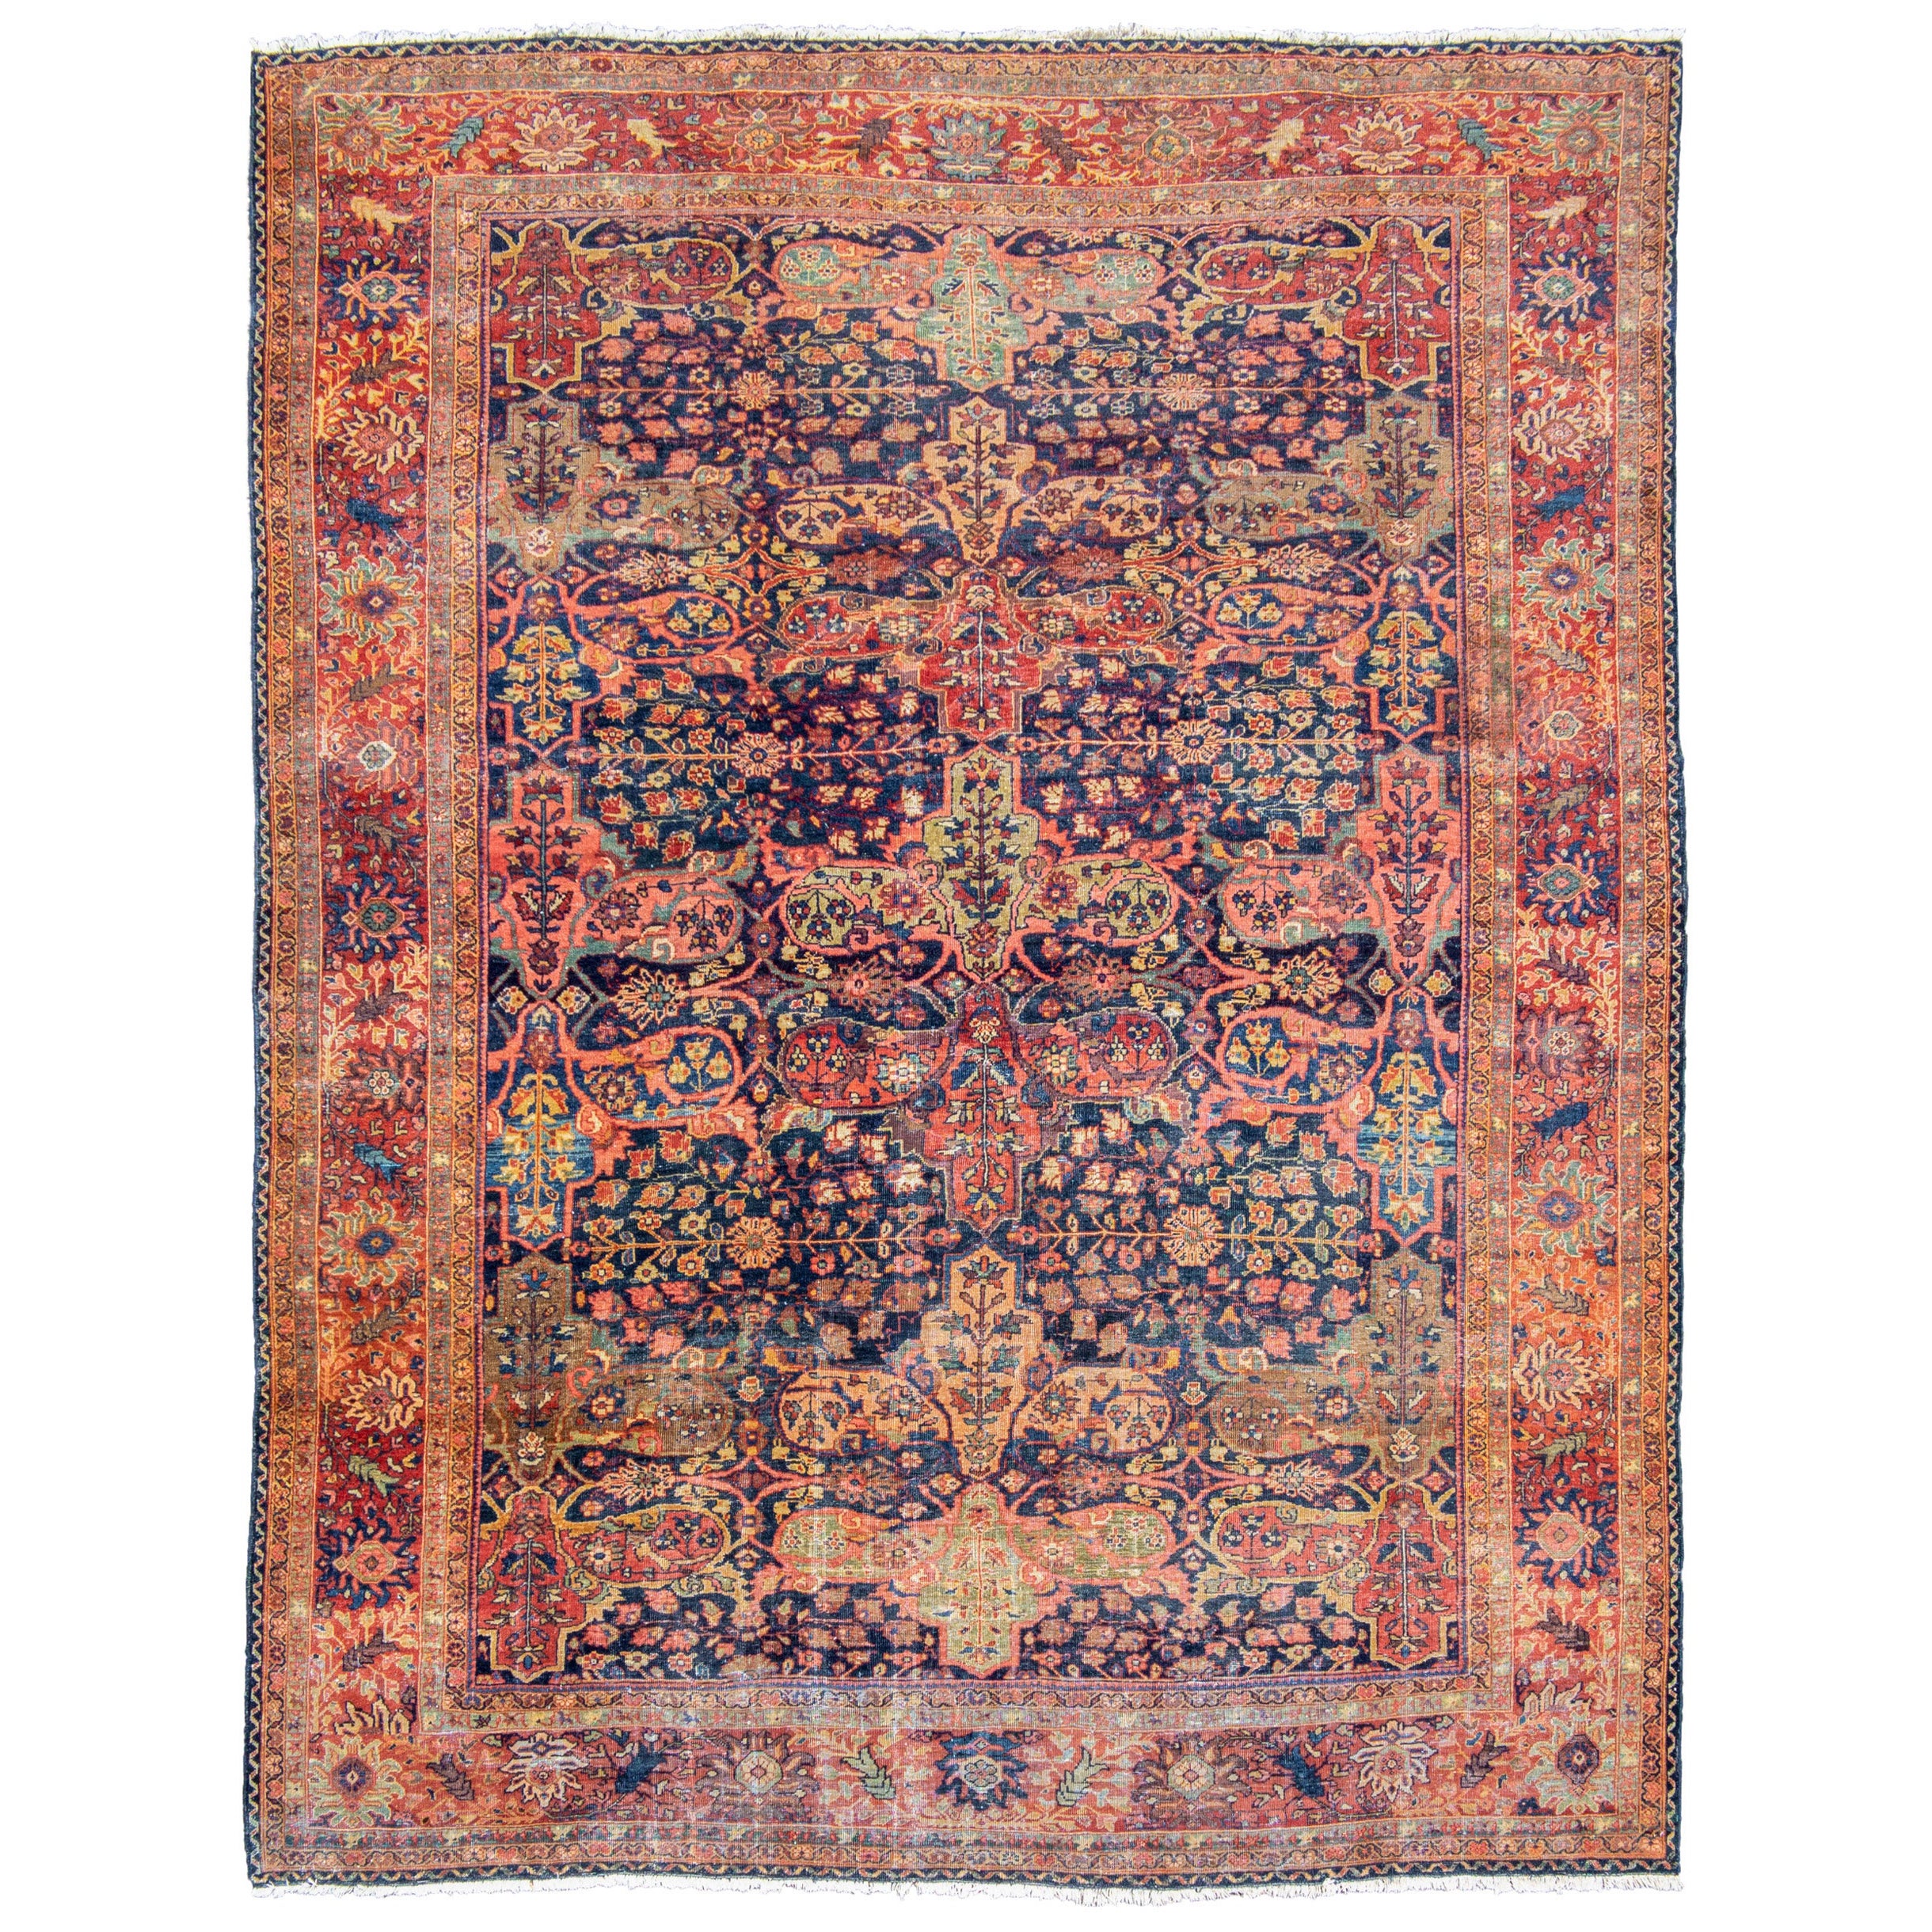 Antiker persischer Fereghan-Teppich aus Persien, um 1900